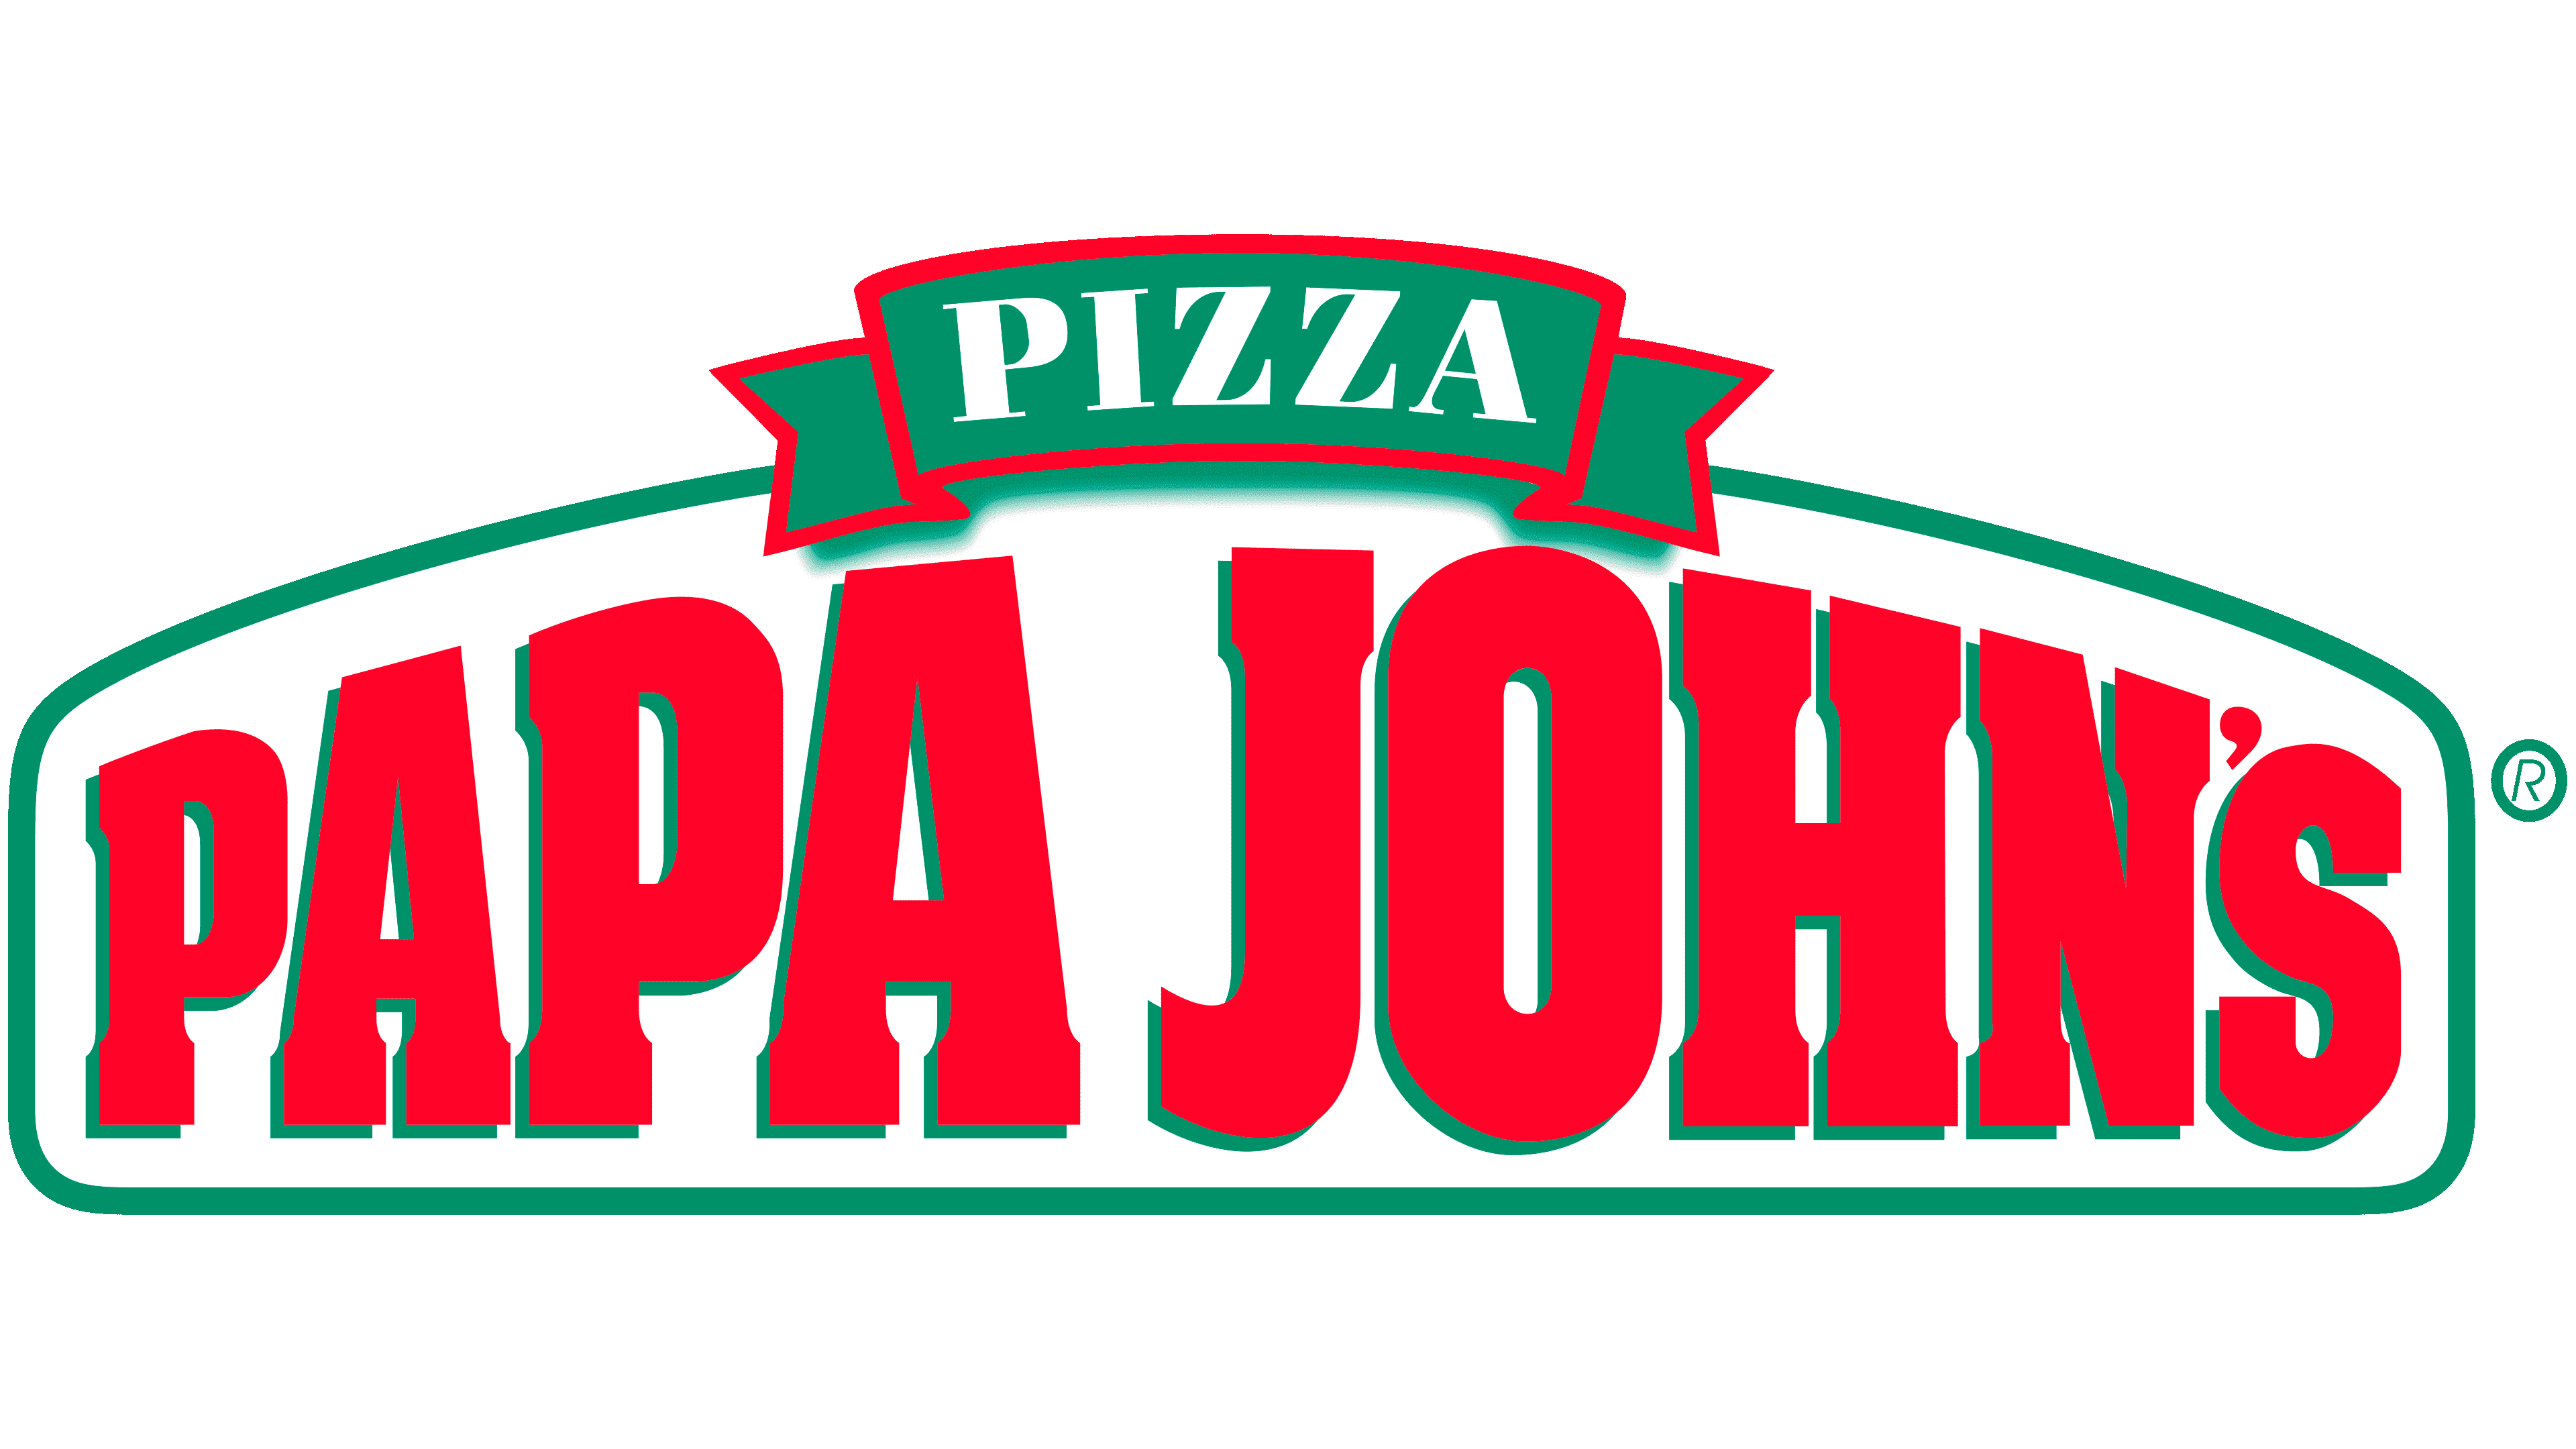 Papa John's Pizza in Ames. Iowa.